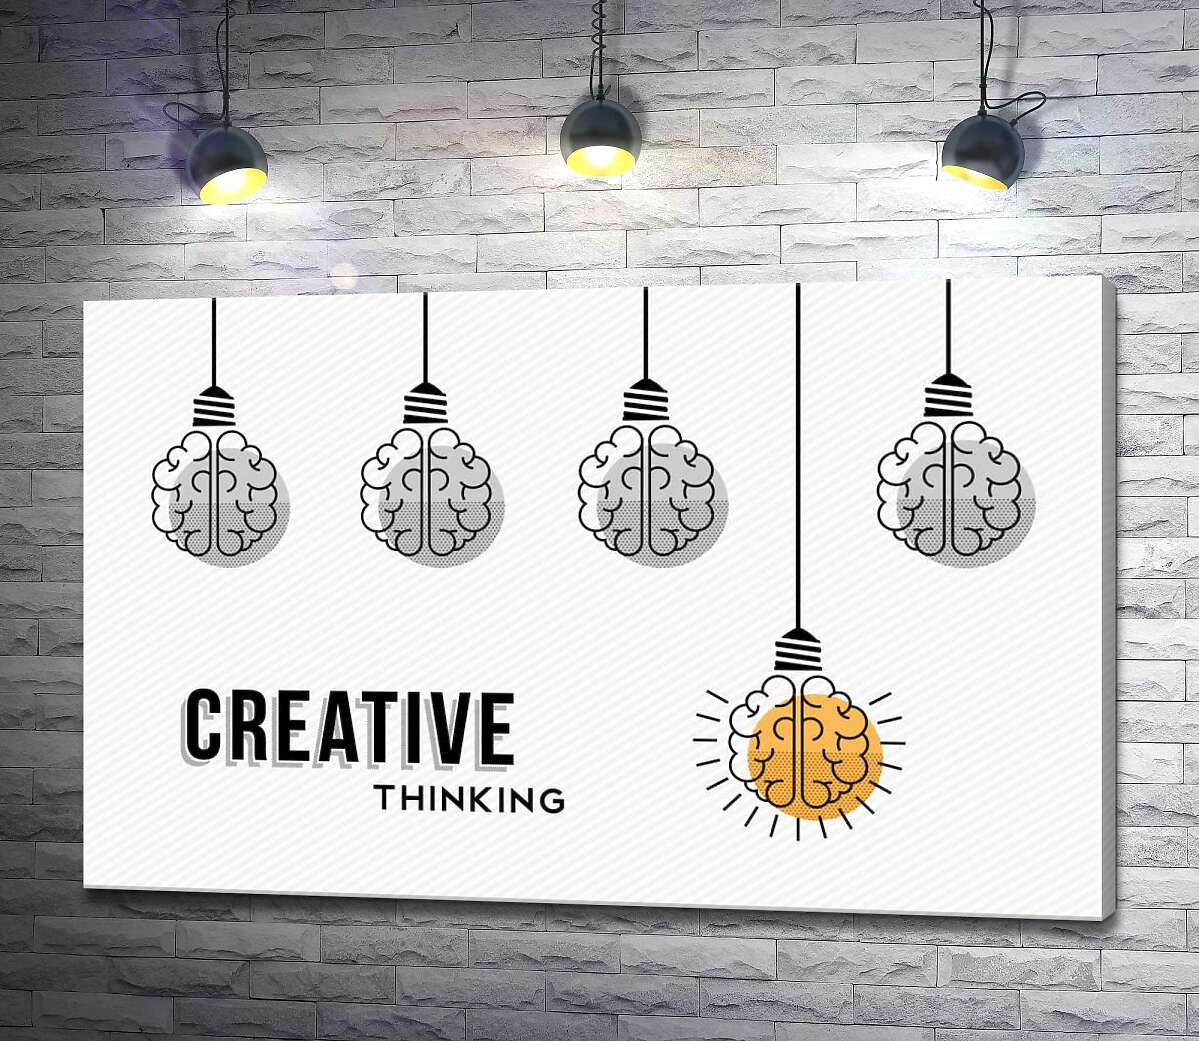 картина Гирлянда из лампочек над фразой "creative thinking"